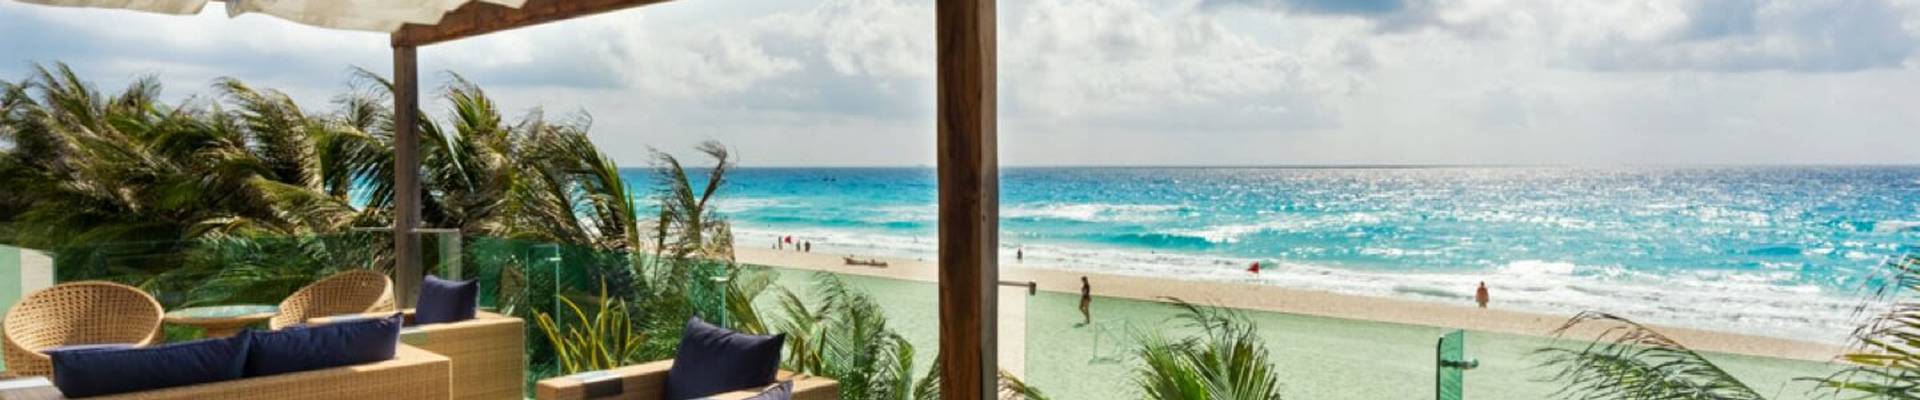 Flamingo Hotels - Cancun - 